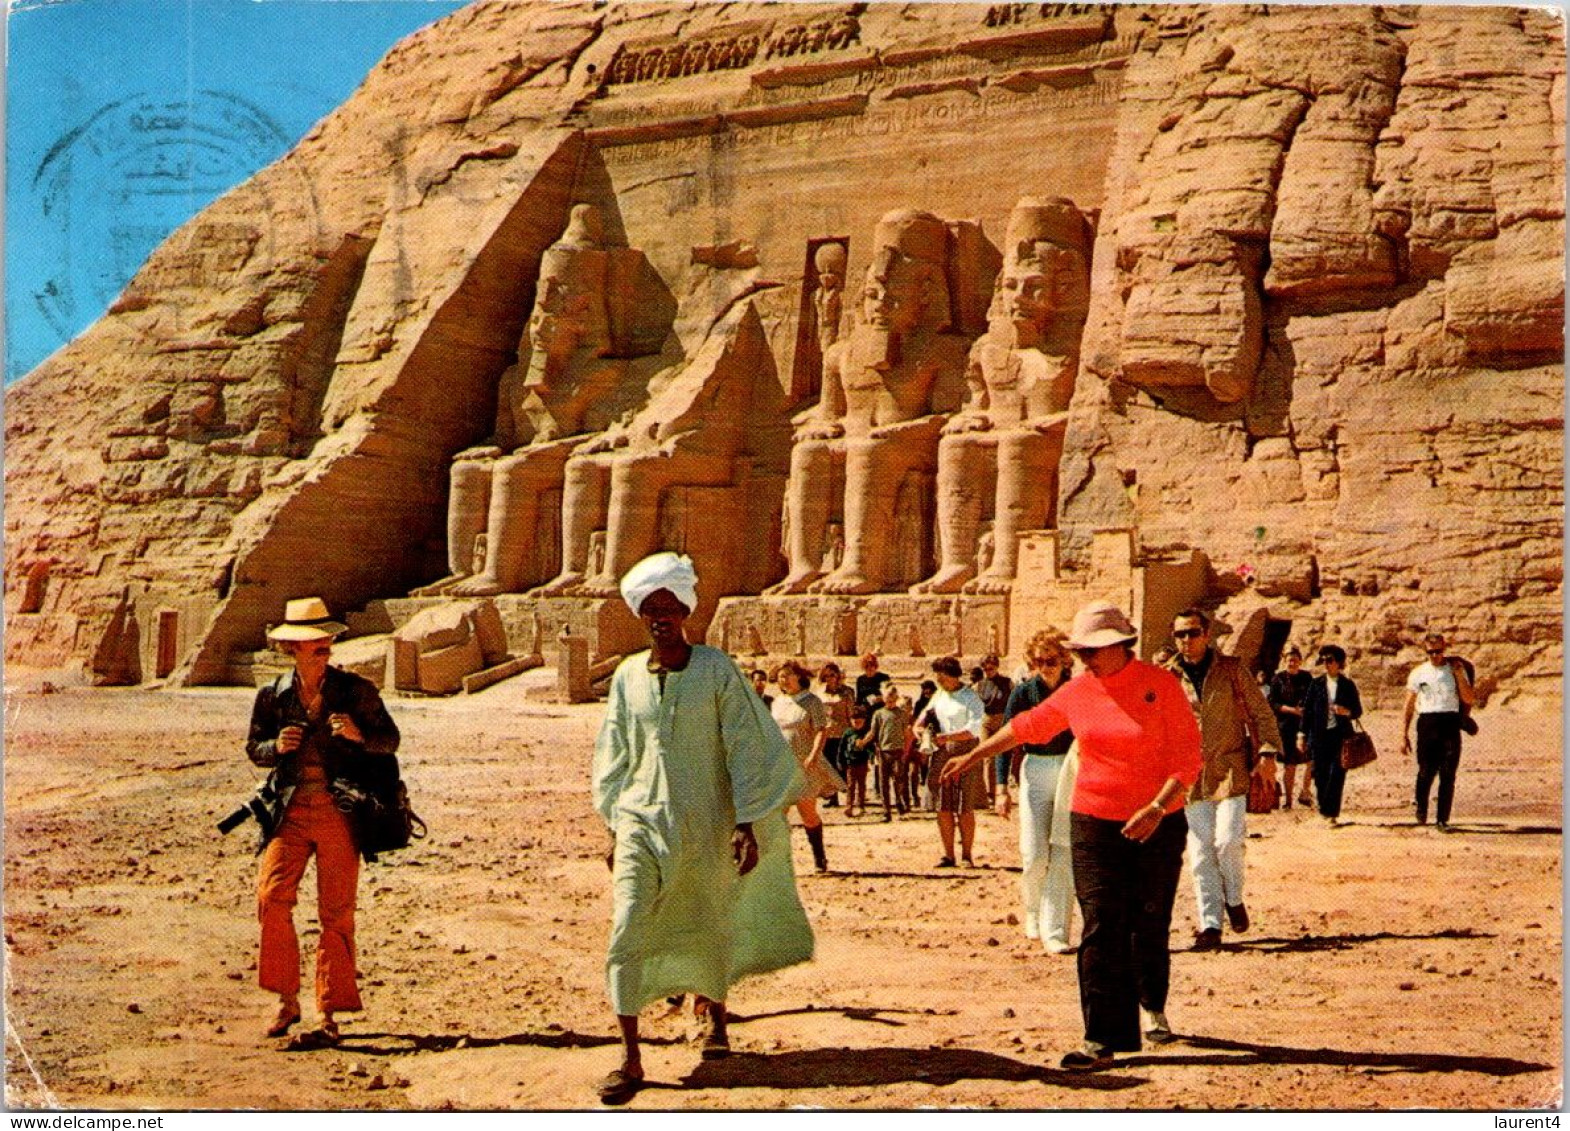 23-3-2024 (3 Y 46) Egypt - Abu Simbel Temple - Abu Simbel Temples